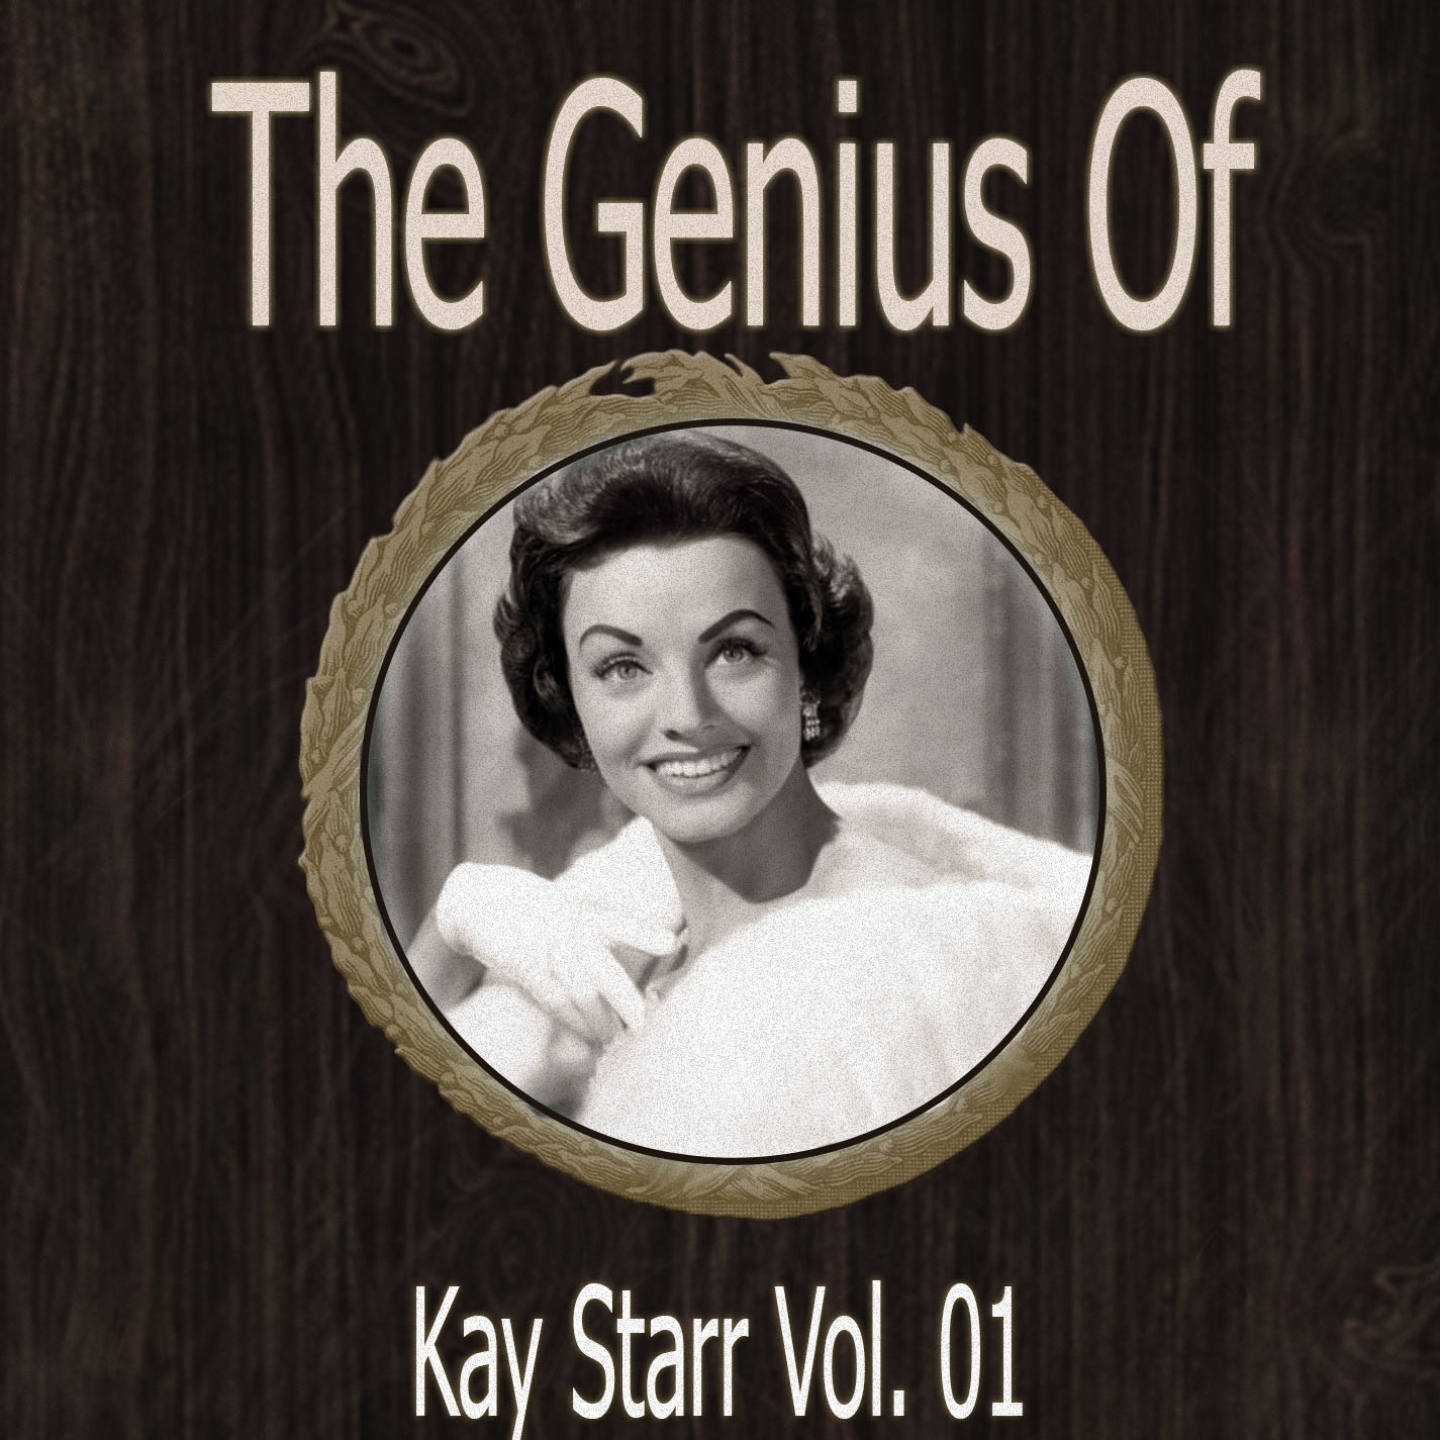 The Genius of Kay Starr Vol 01